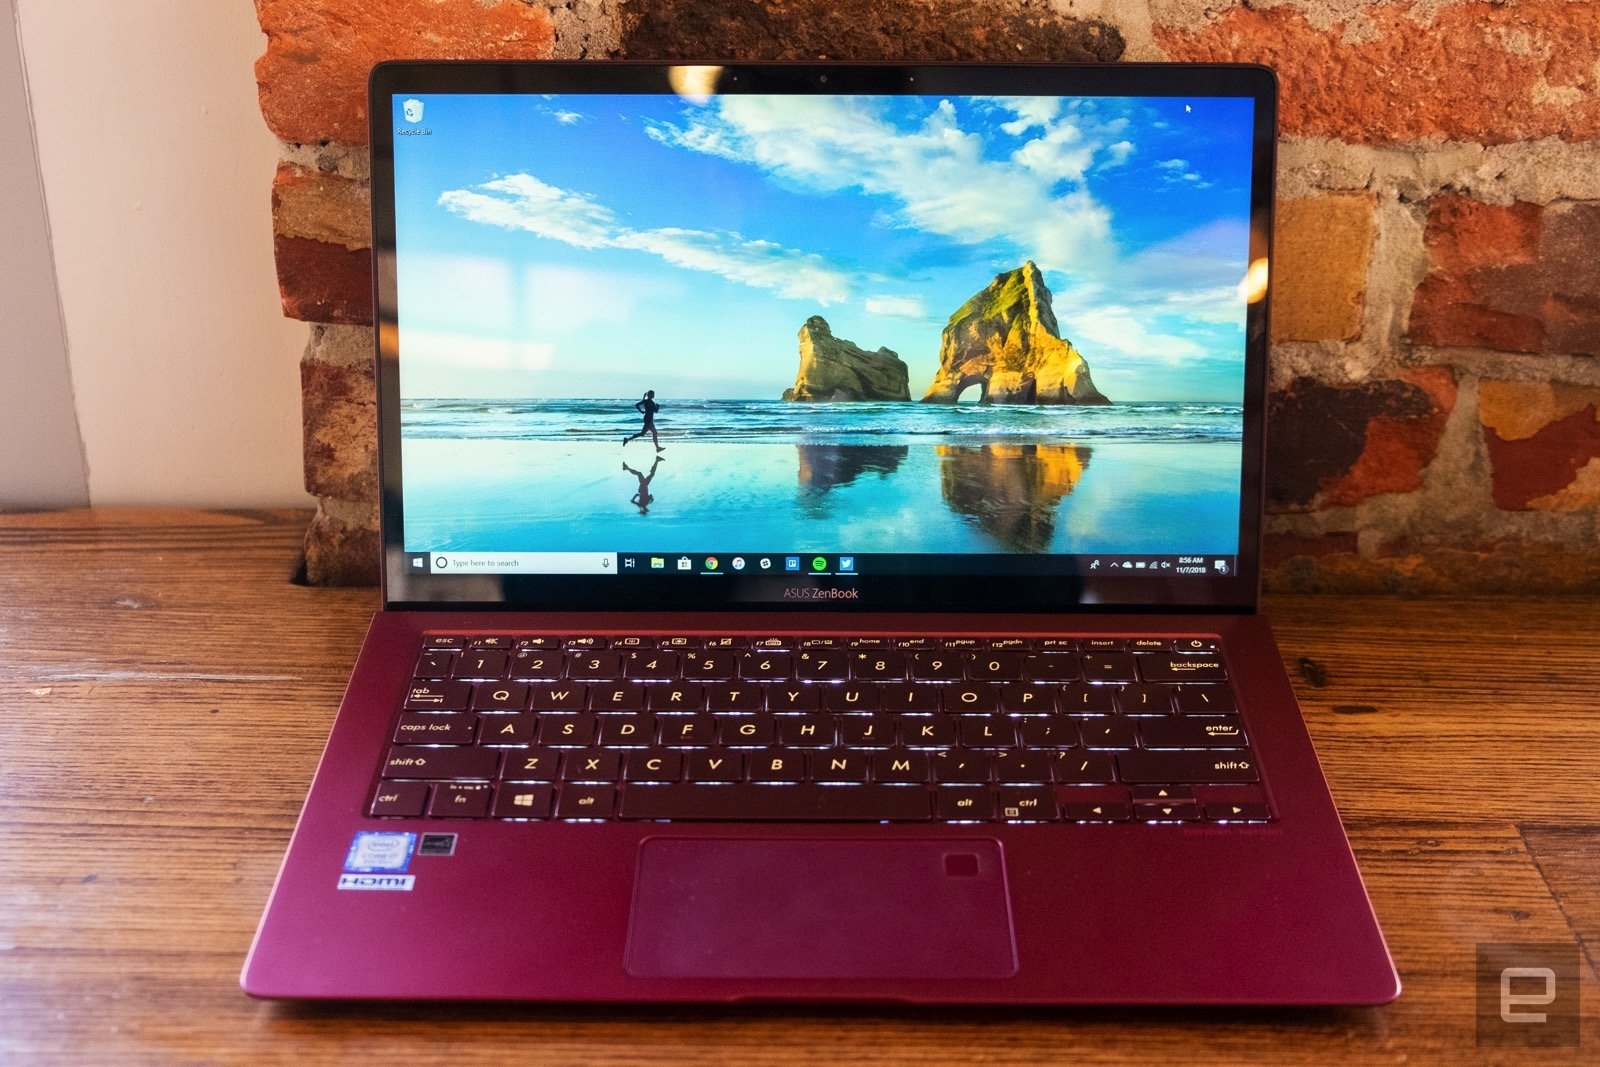 ASUS ZenBook S review: Just a decent laptop | DeviceDaily.com